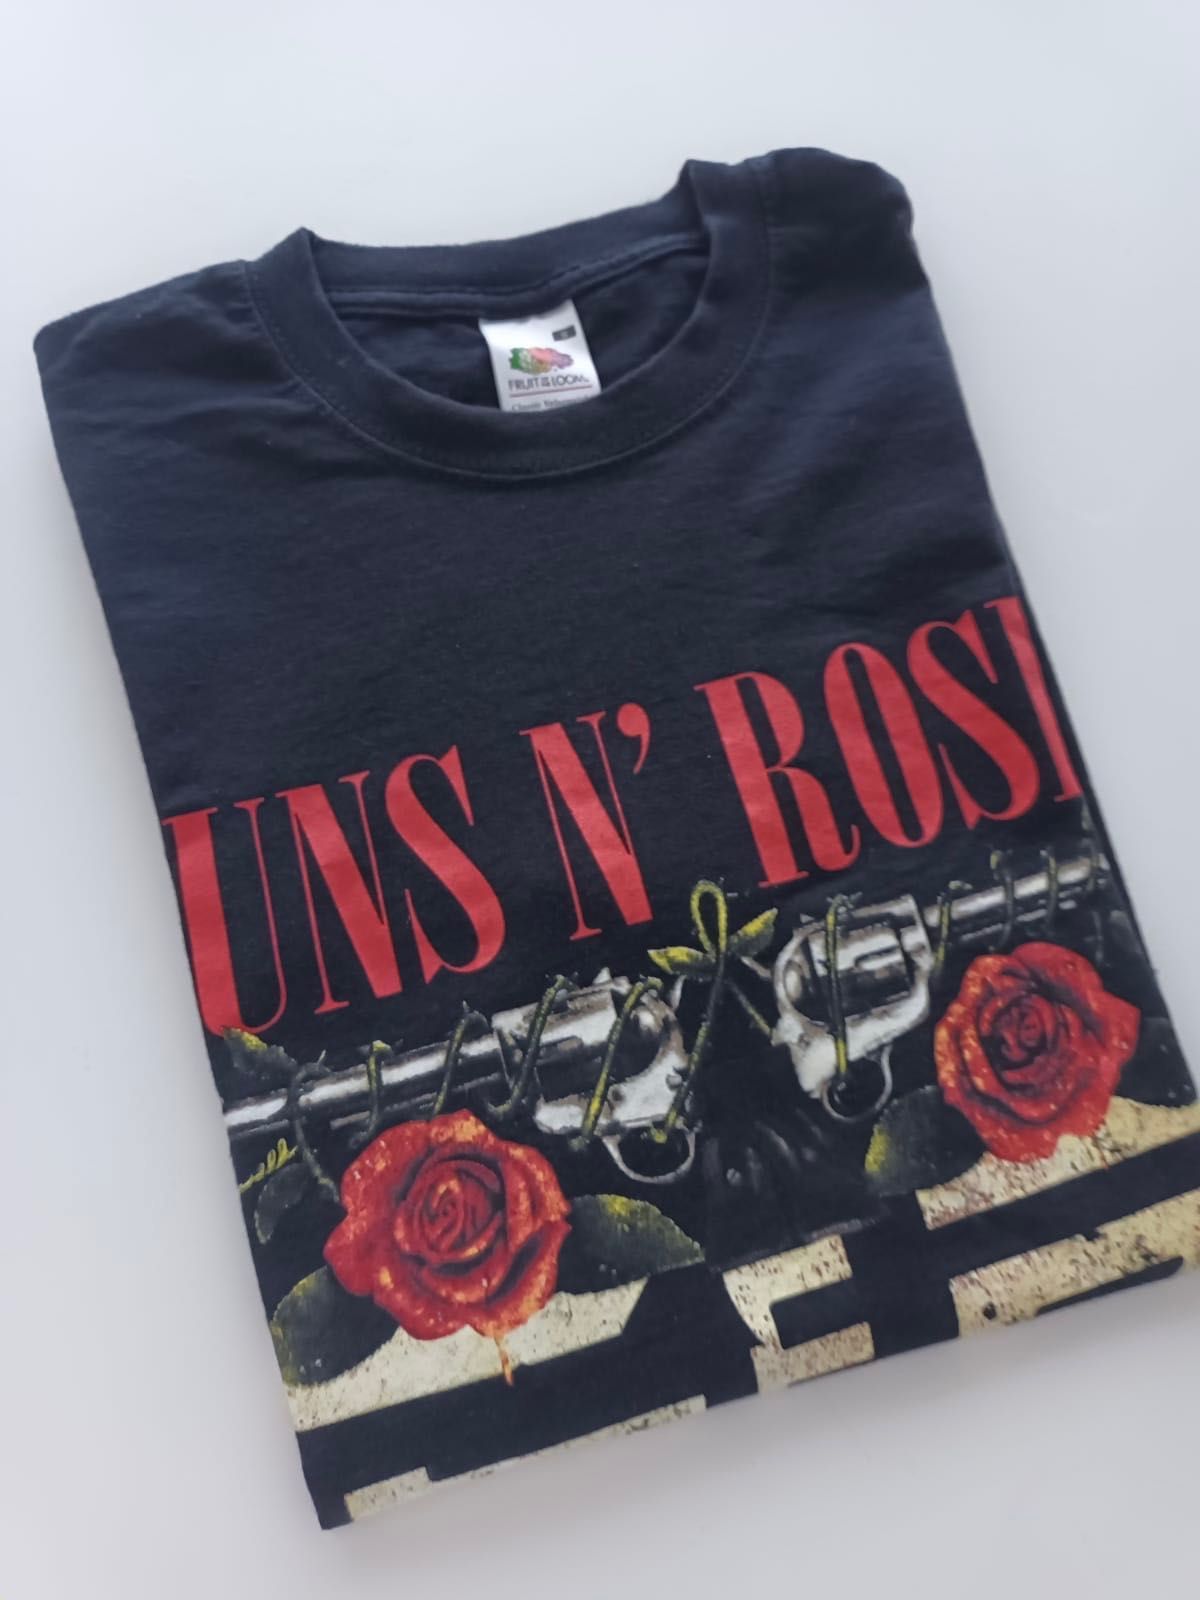 Tshirt Guns N’ Roses Rock In Rio 2006